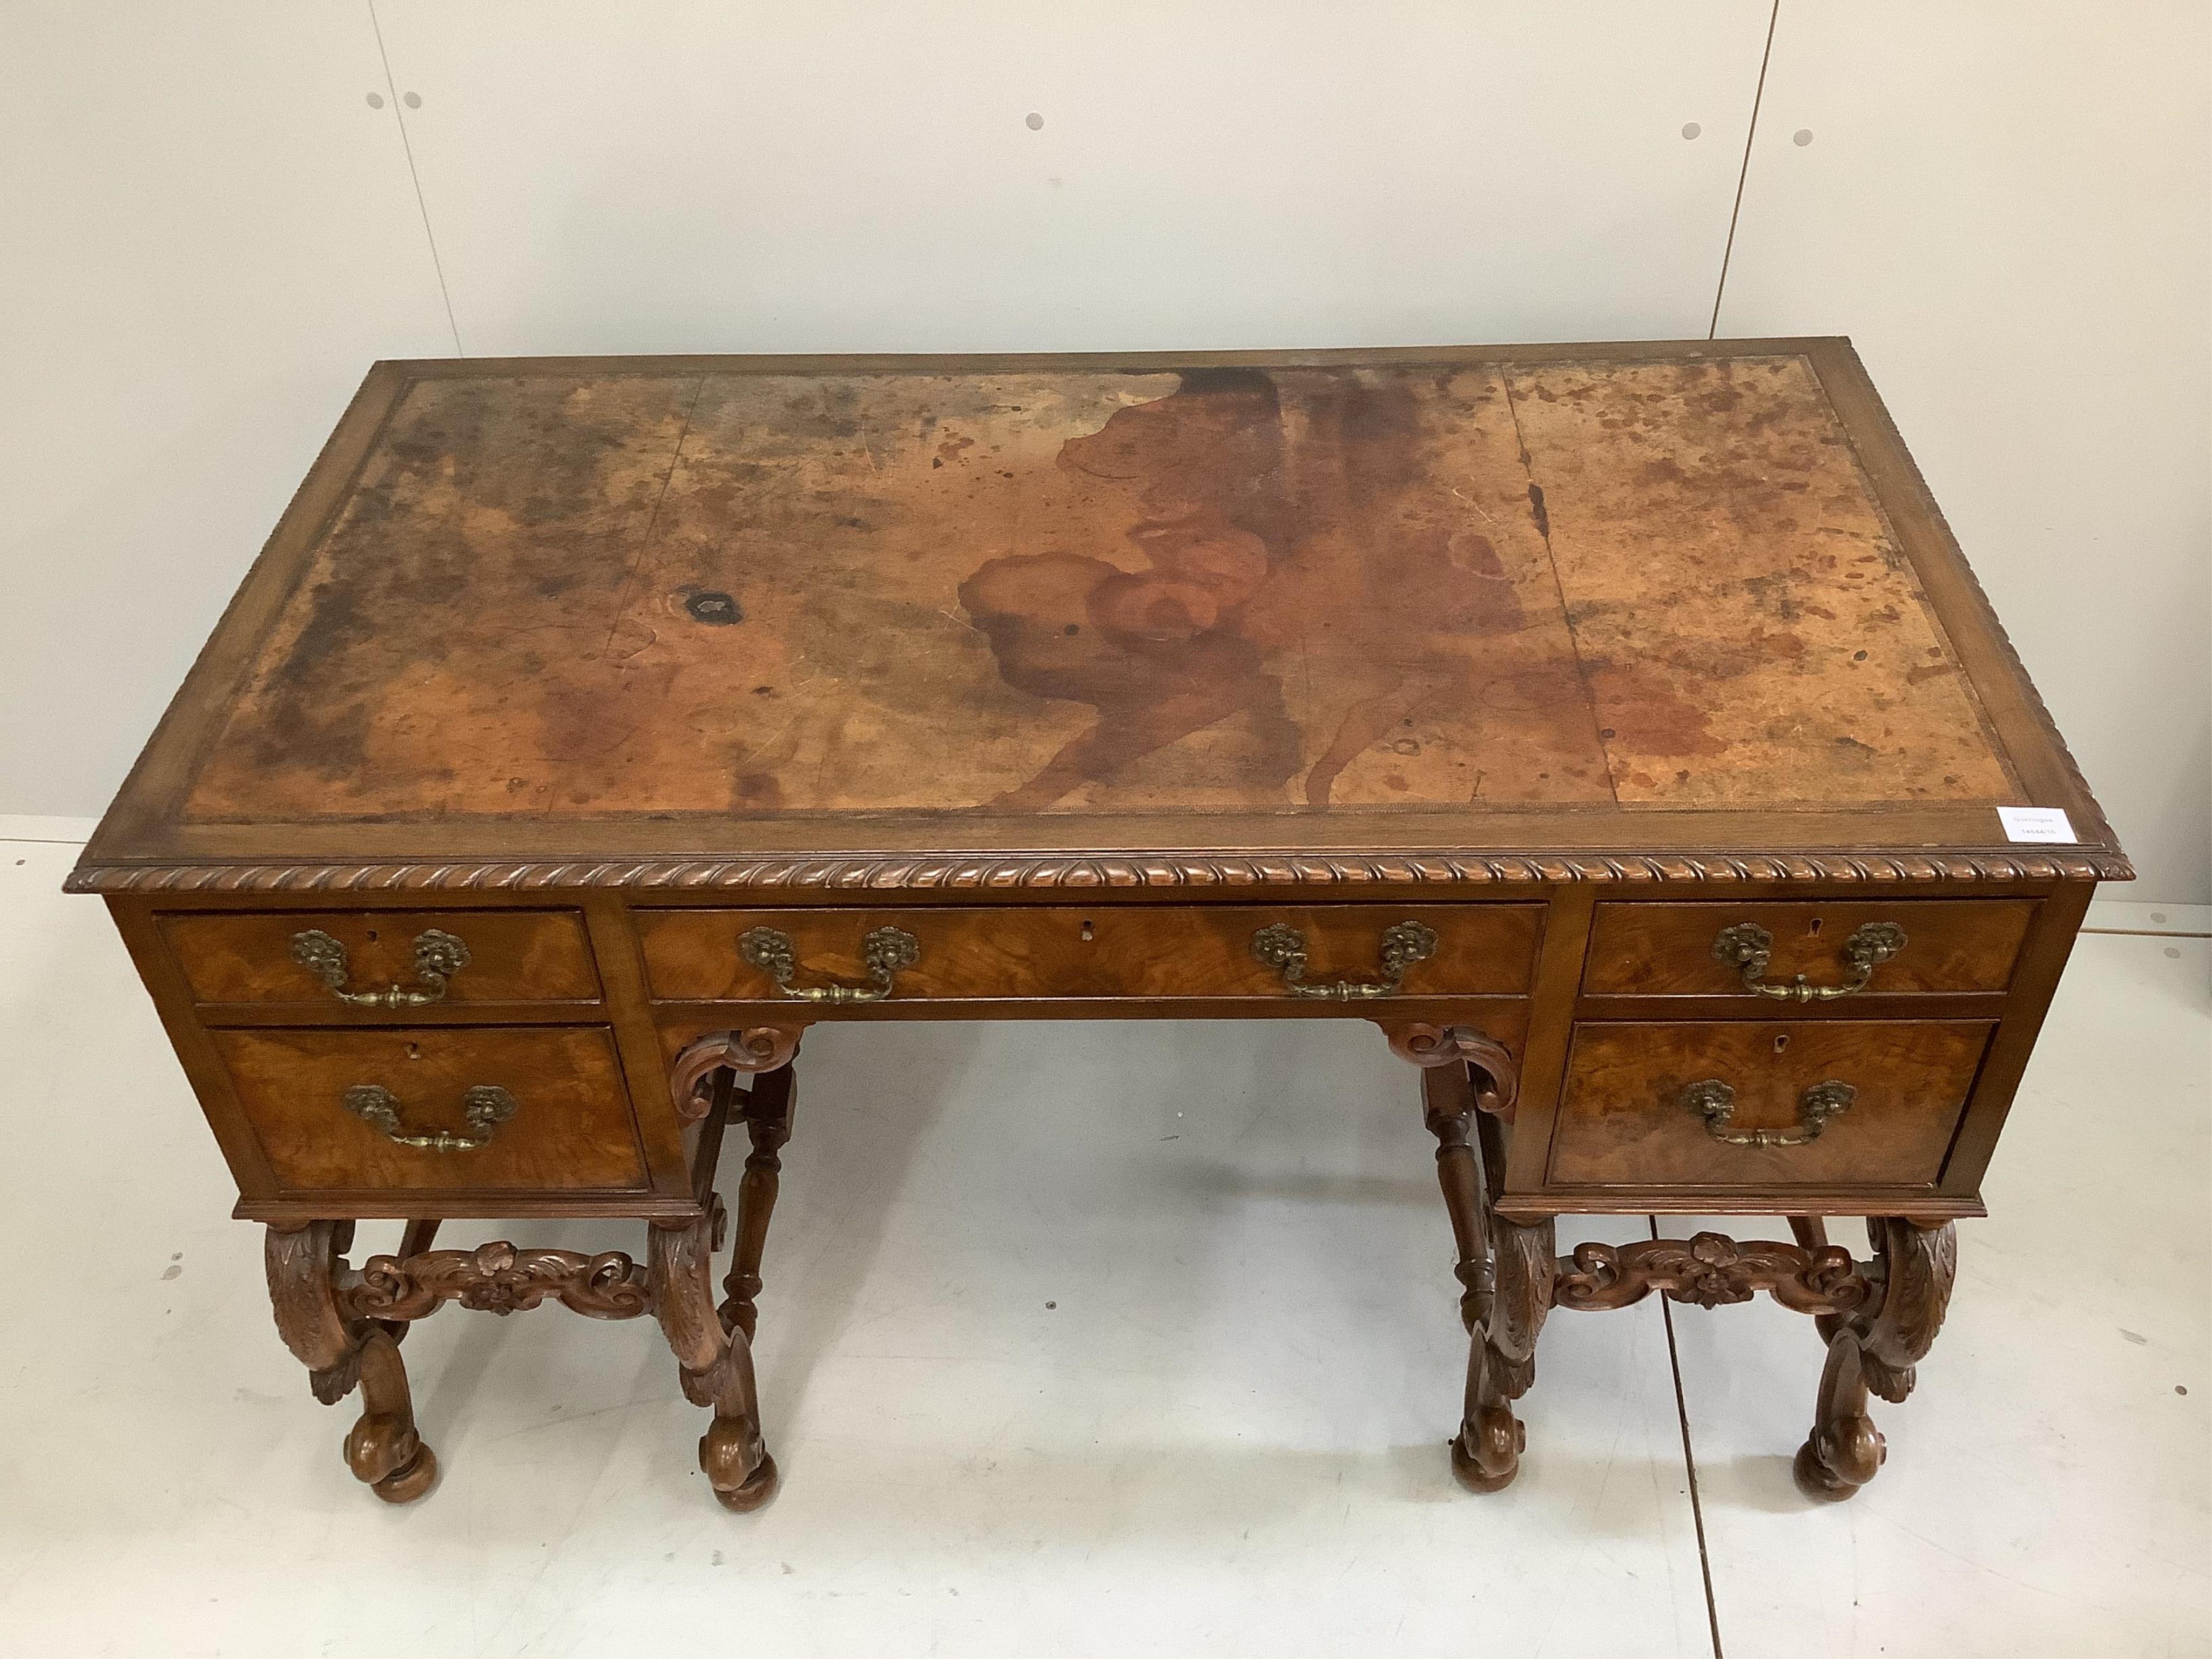 A Queen Anne Revival mahogany kneehole desk, width 129cm, depth 68cm, height 77cm. Condition - fair